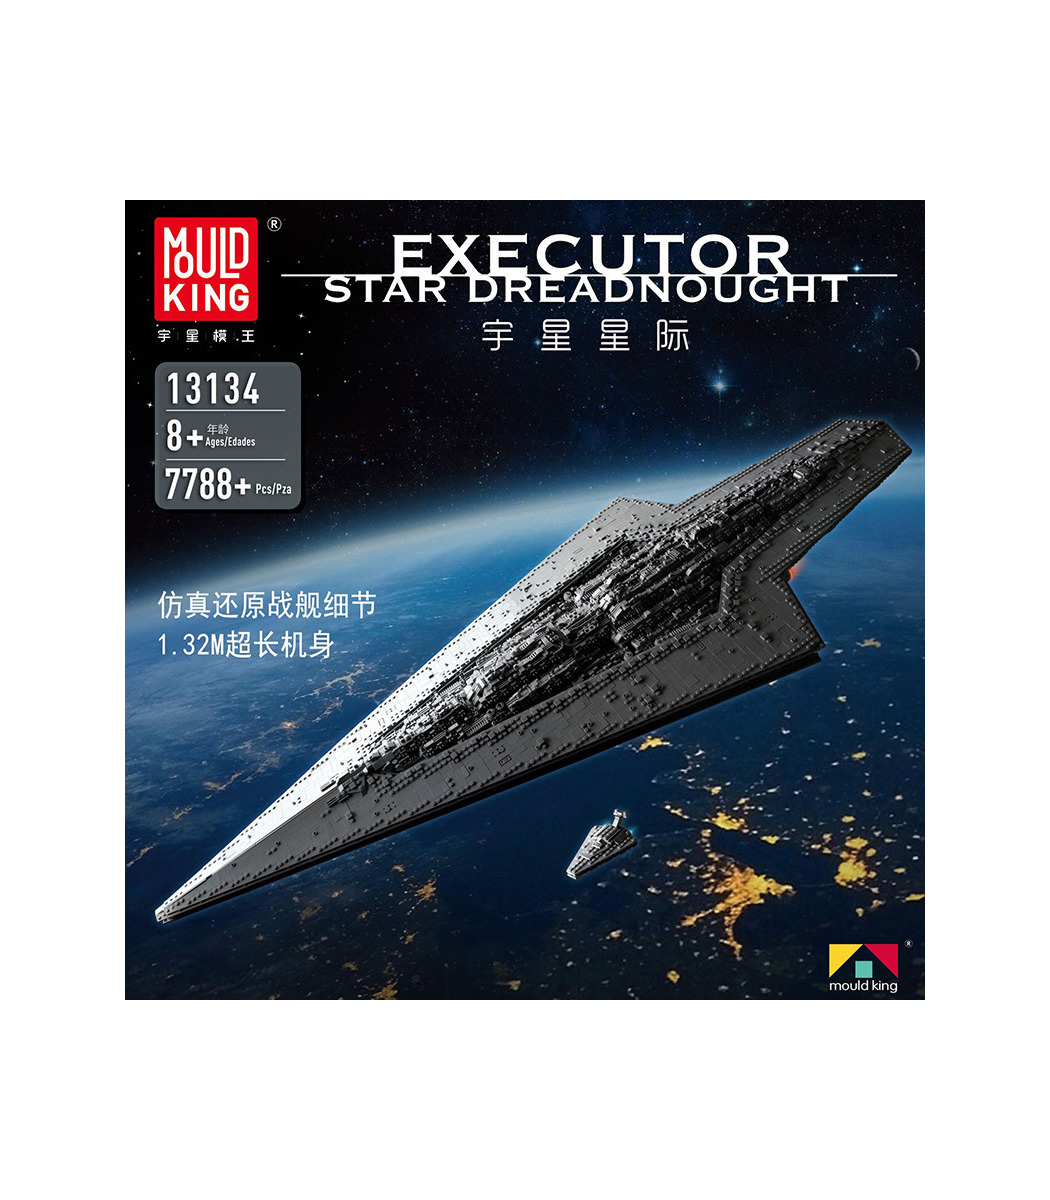 MOULD KING 13134 Star Wars Star Dreadnought Building Blocks Toy Set 